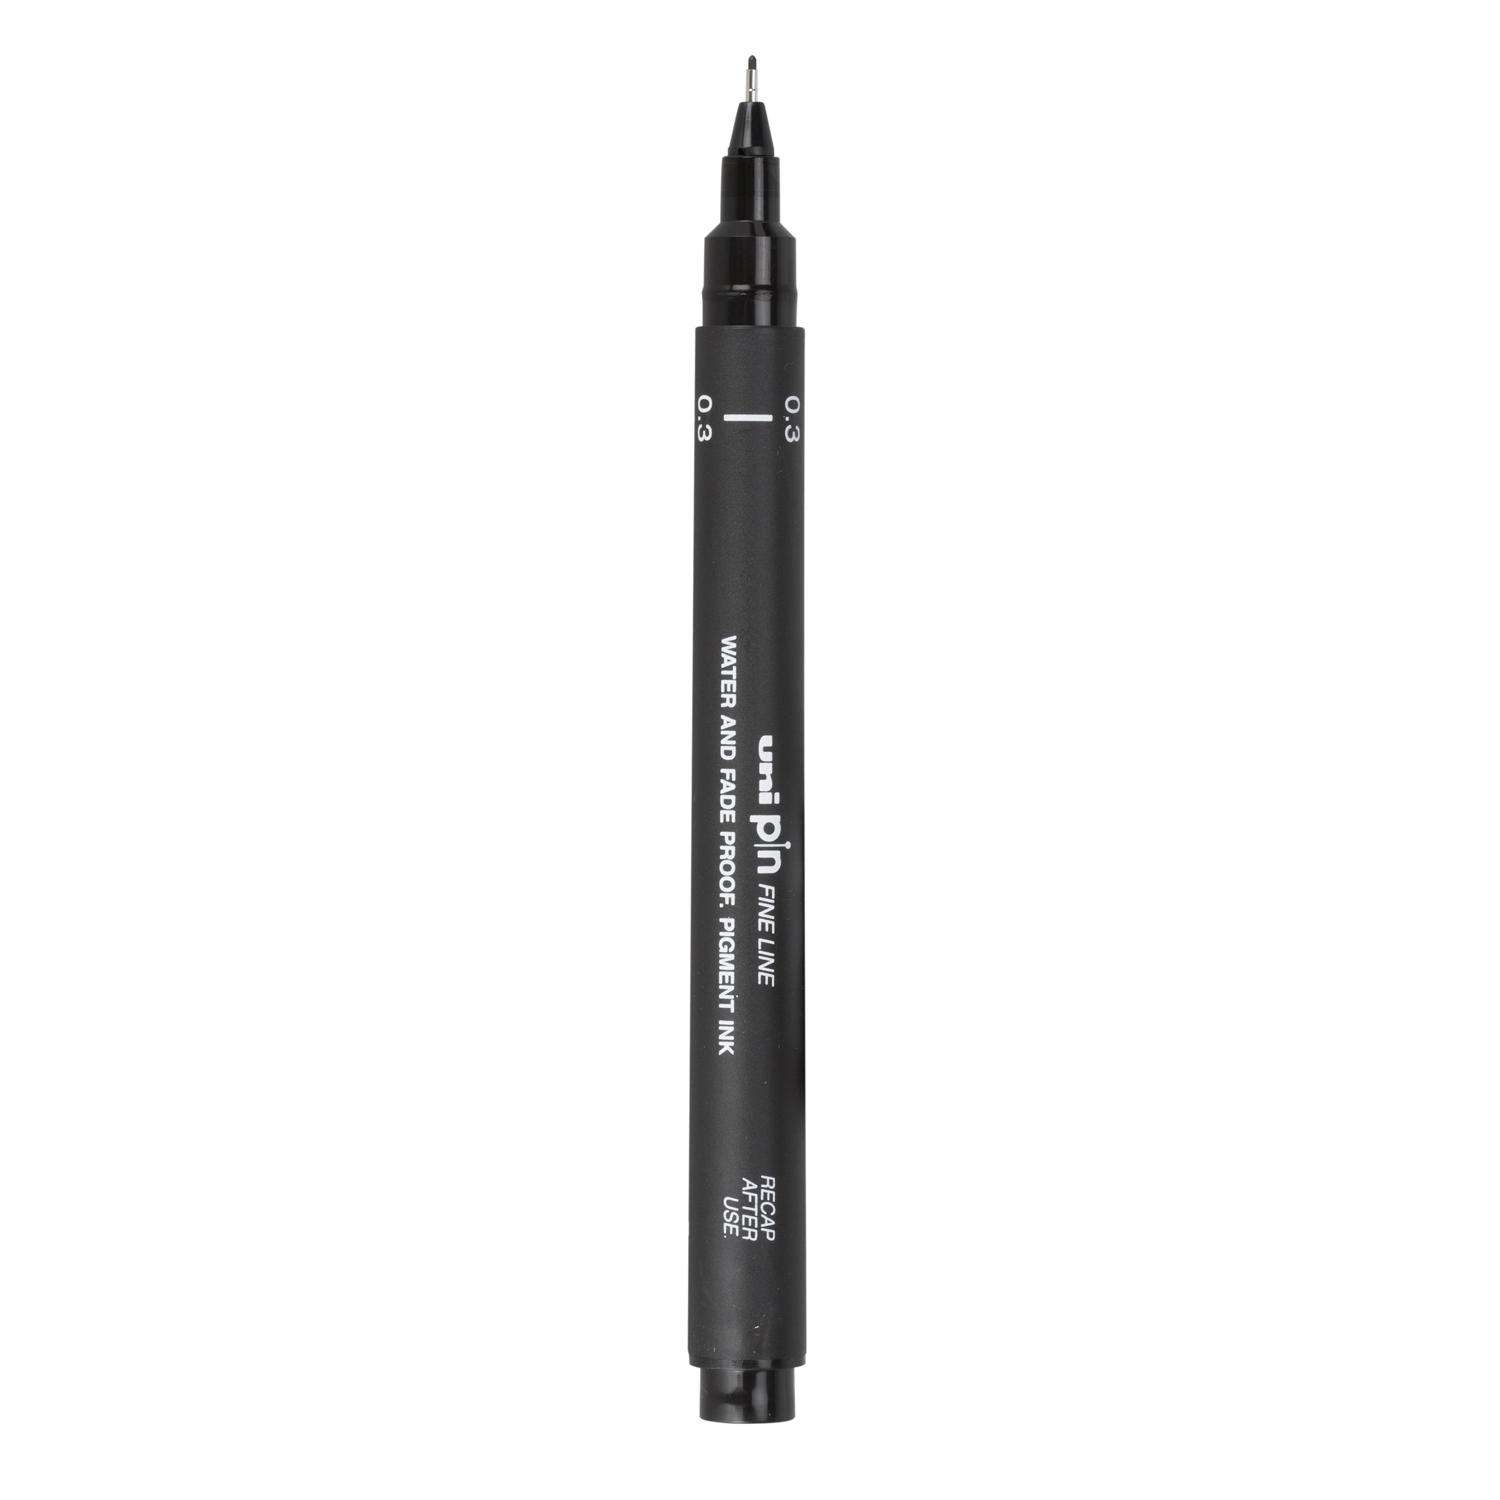 Uniball Pin Fine Liner Drawing Pen - Black / 0.3mm Image 2